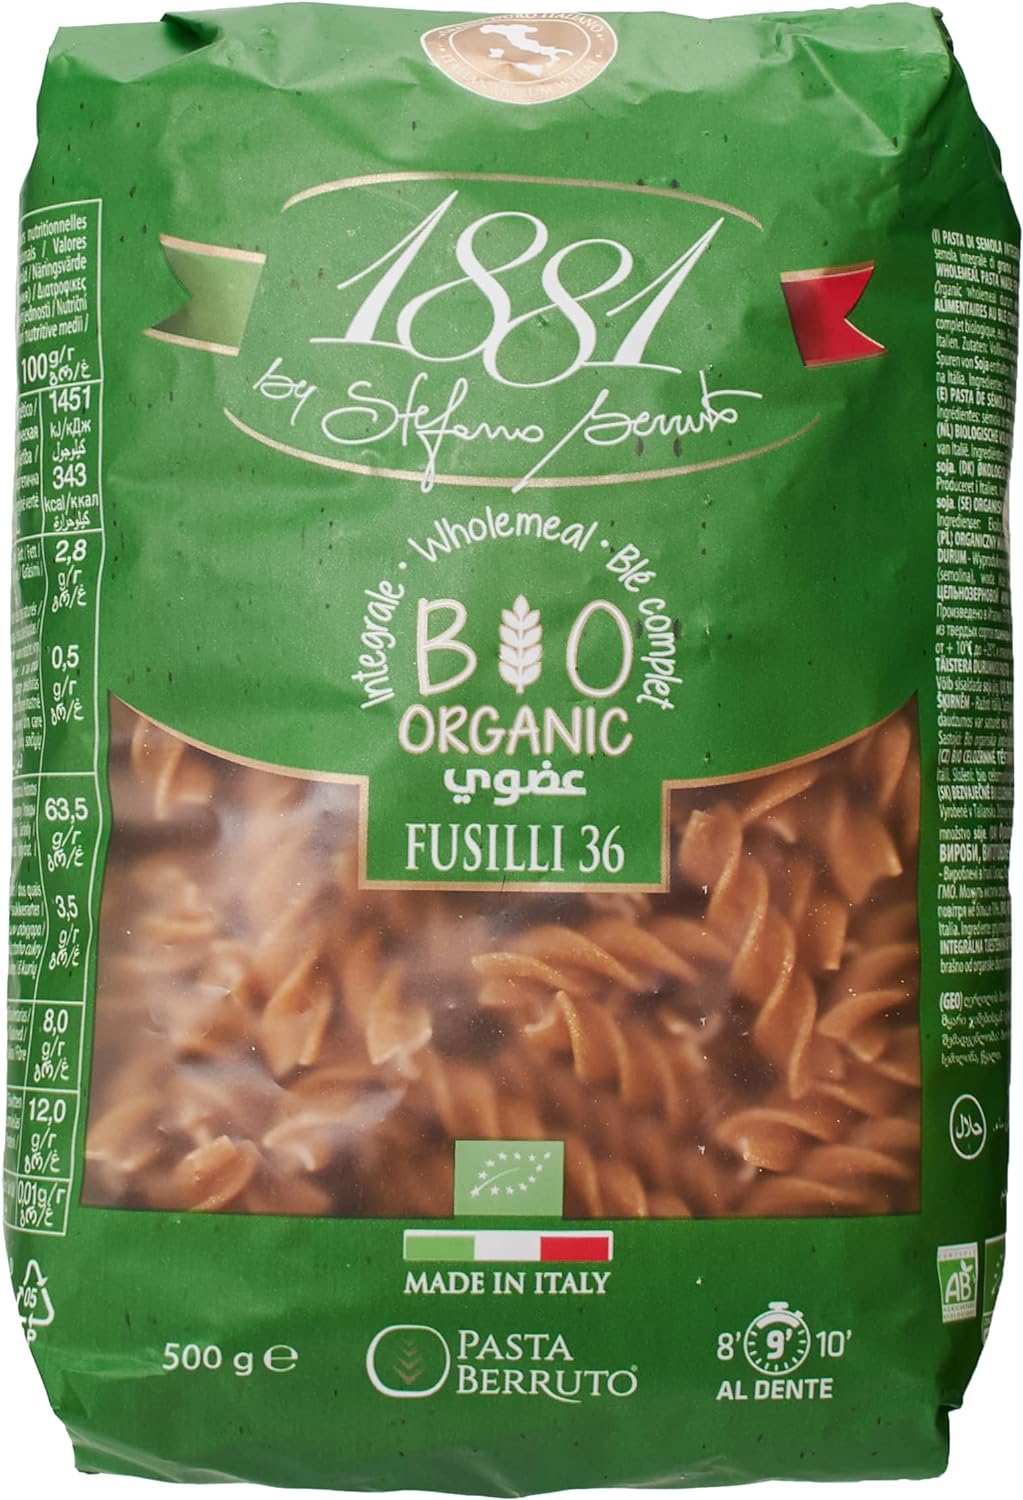 1881 Organic Whole meal Fusilli36 Pasta 500g